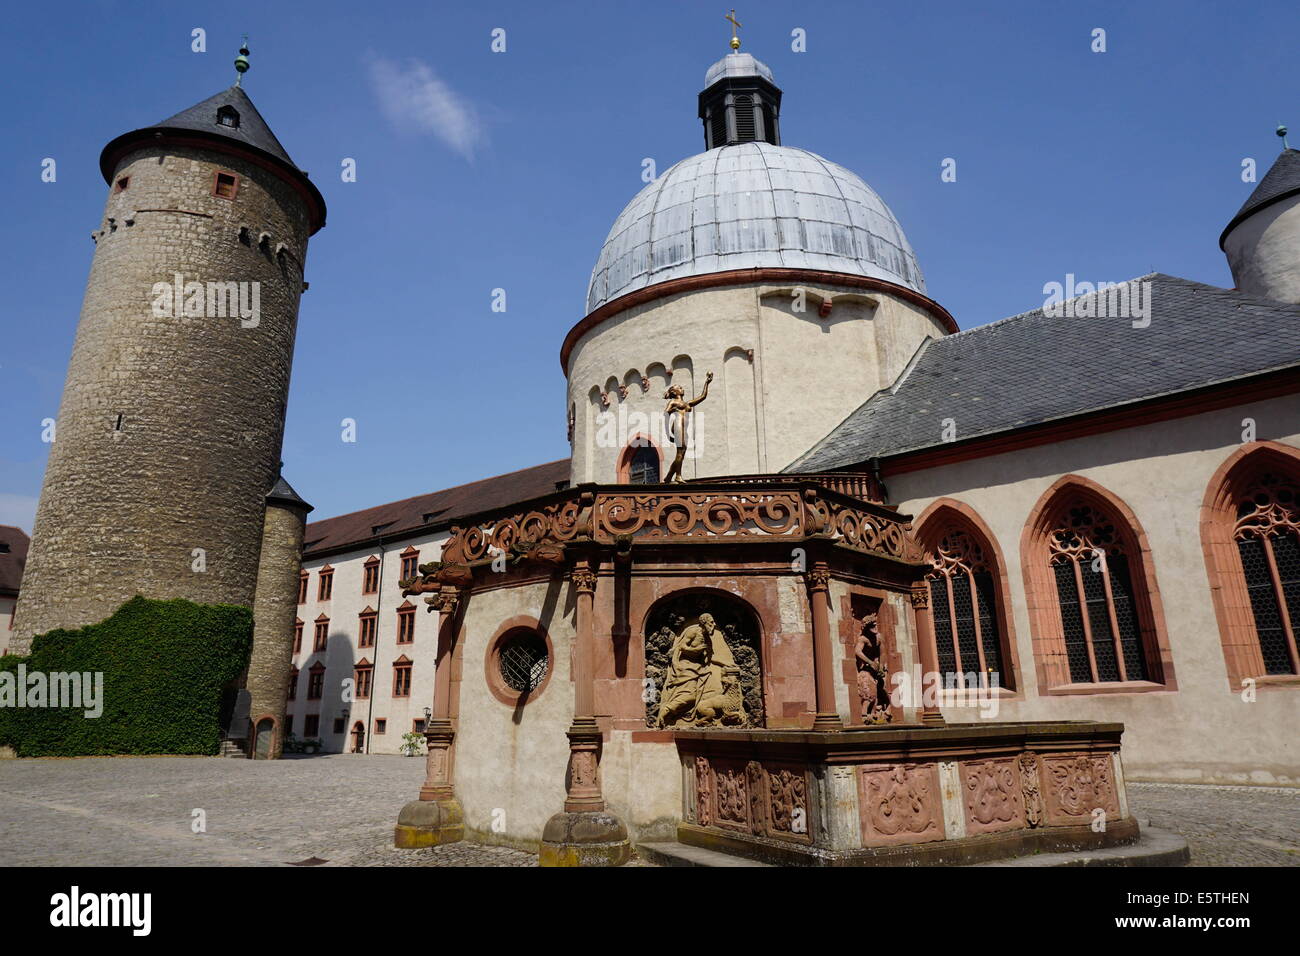 Maschikuli Tower and the Marienkirche, Marienberg Fortress, Wurzburg, Bavaria, Germany Stock Photo